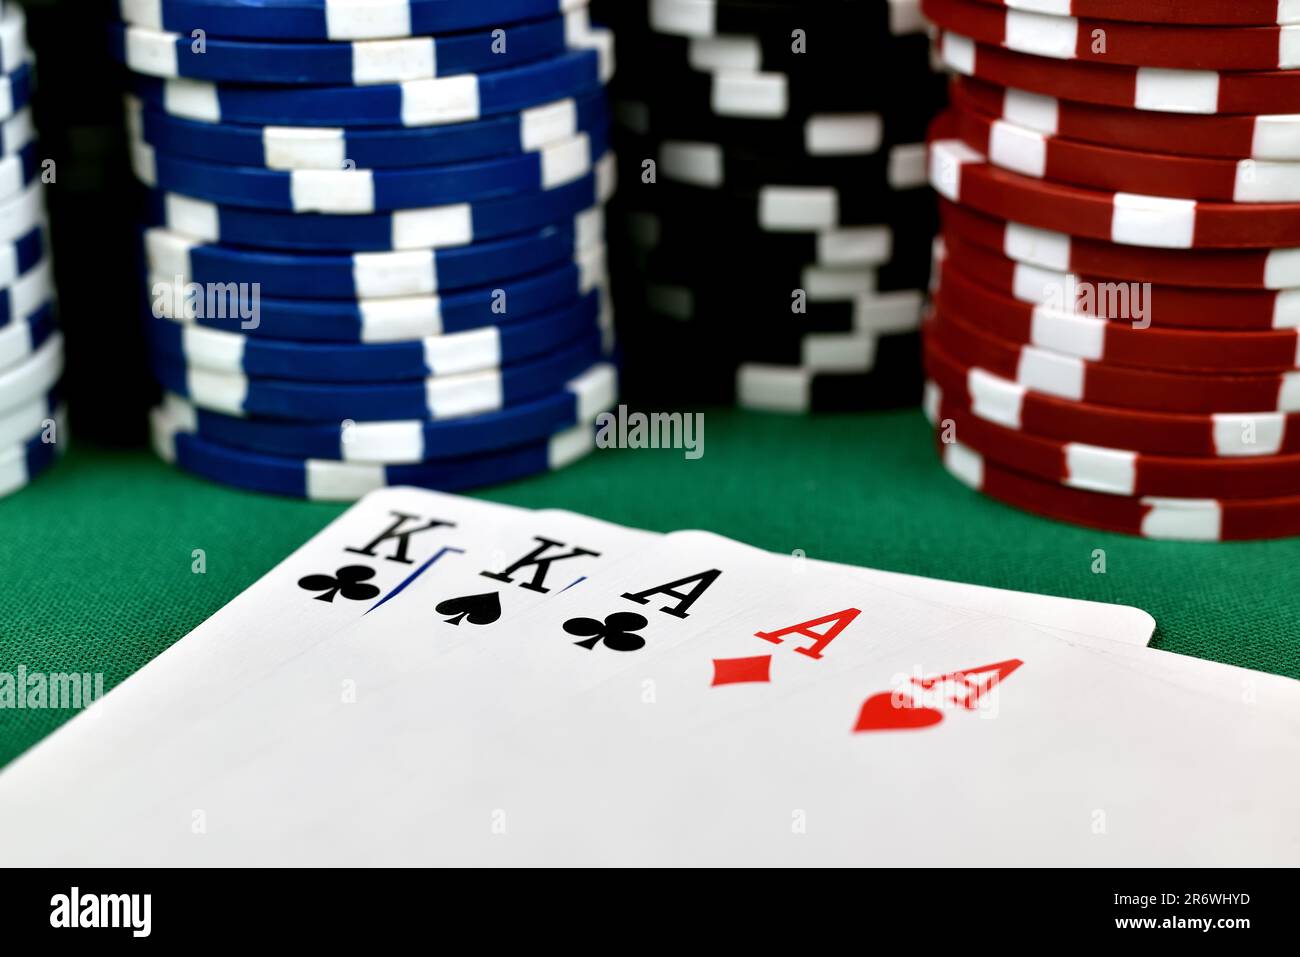 Full house poker -Fotos und -Bildmaterial in hoher Auflösung – Alamy